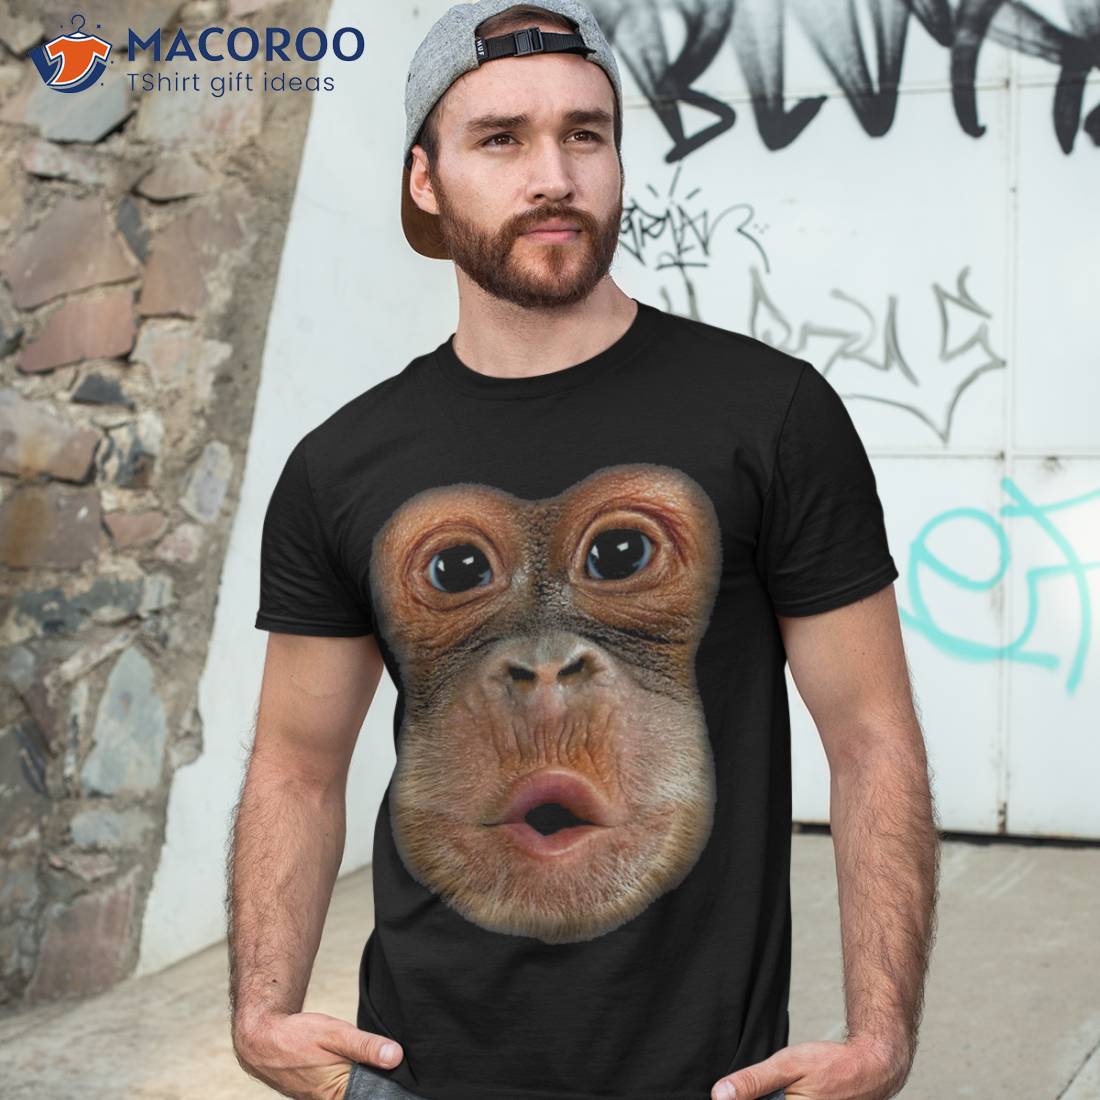 Monkey Stomach Funny Meme Cool Trending Viral Video Tall T-Shirt